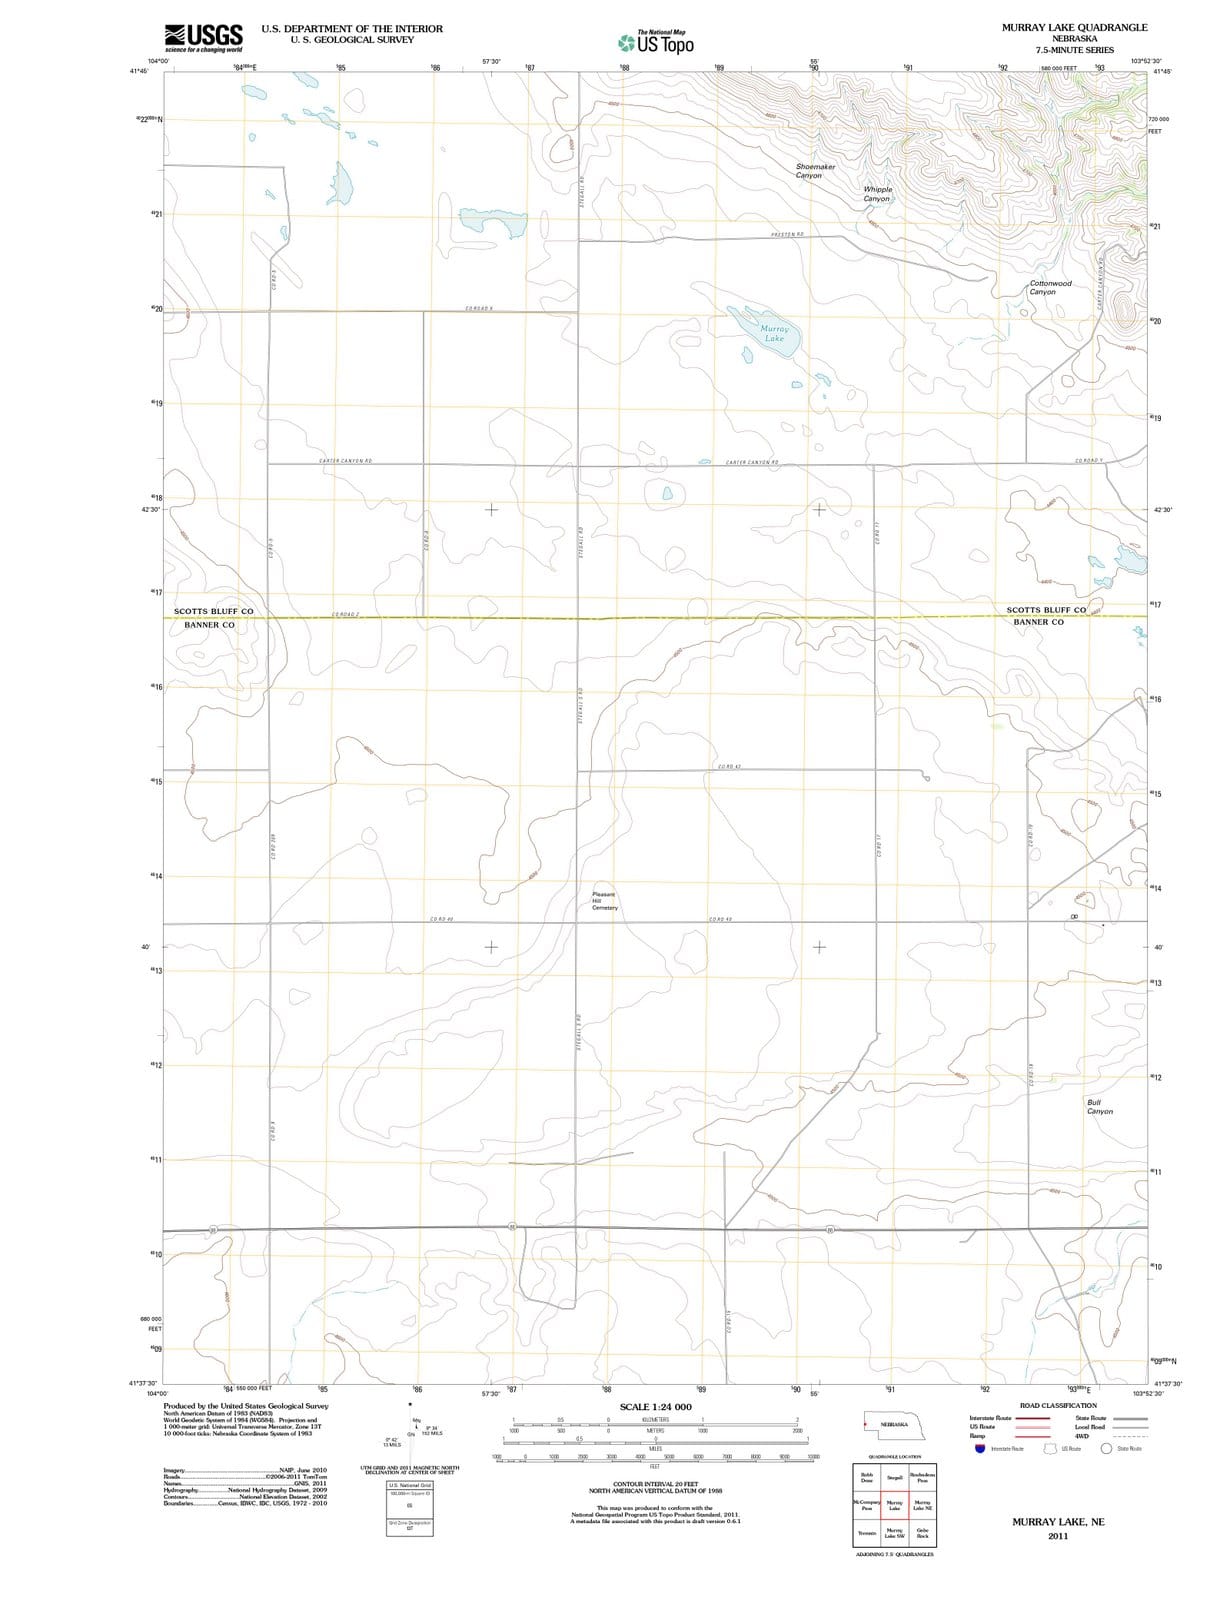 2011 Murray Lake, NE - Nebraska - USGS Topographic Map